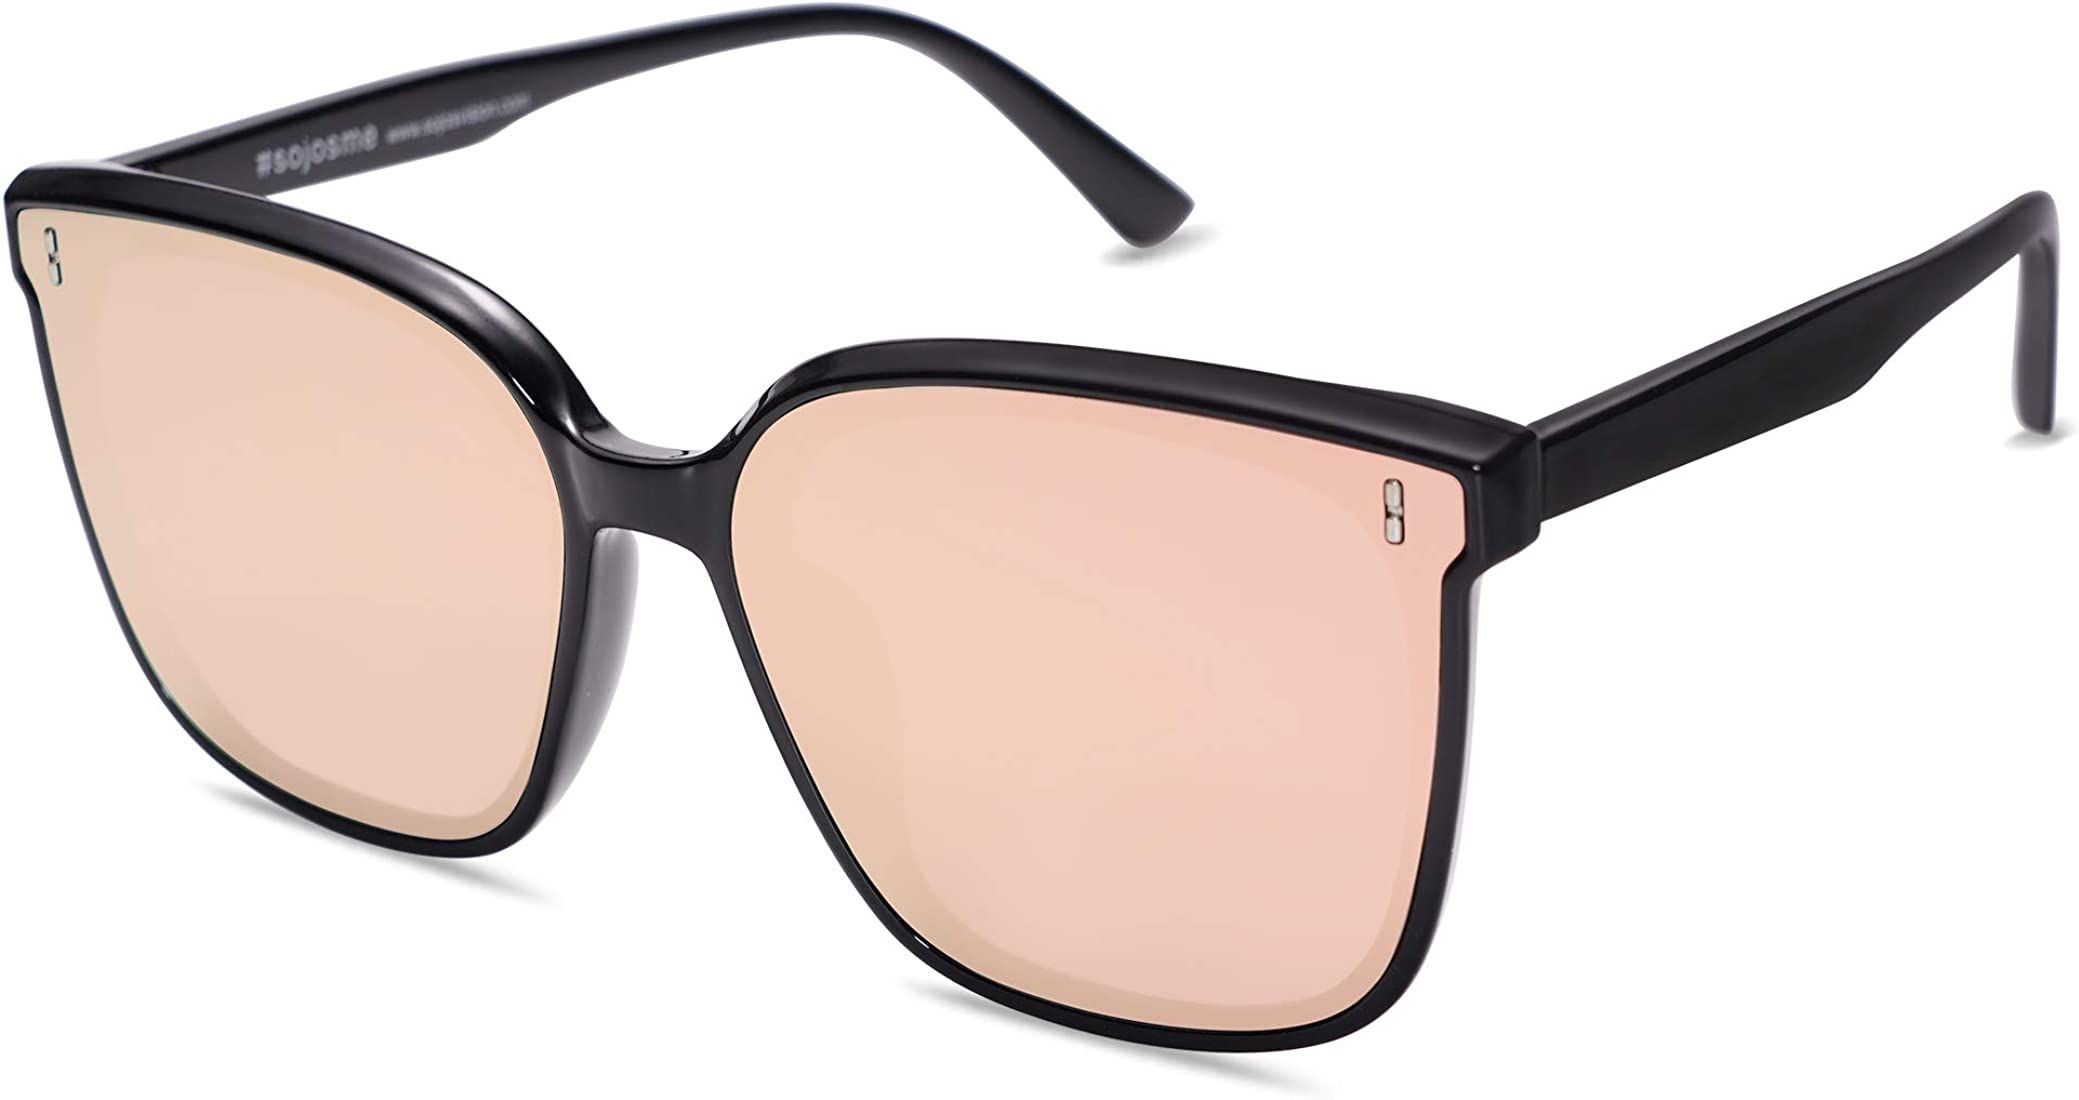 SOJOS Sunglasses for Women Men Vintage Style Shades | Amazon (US)